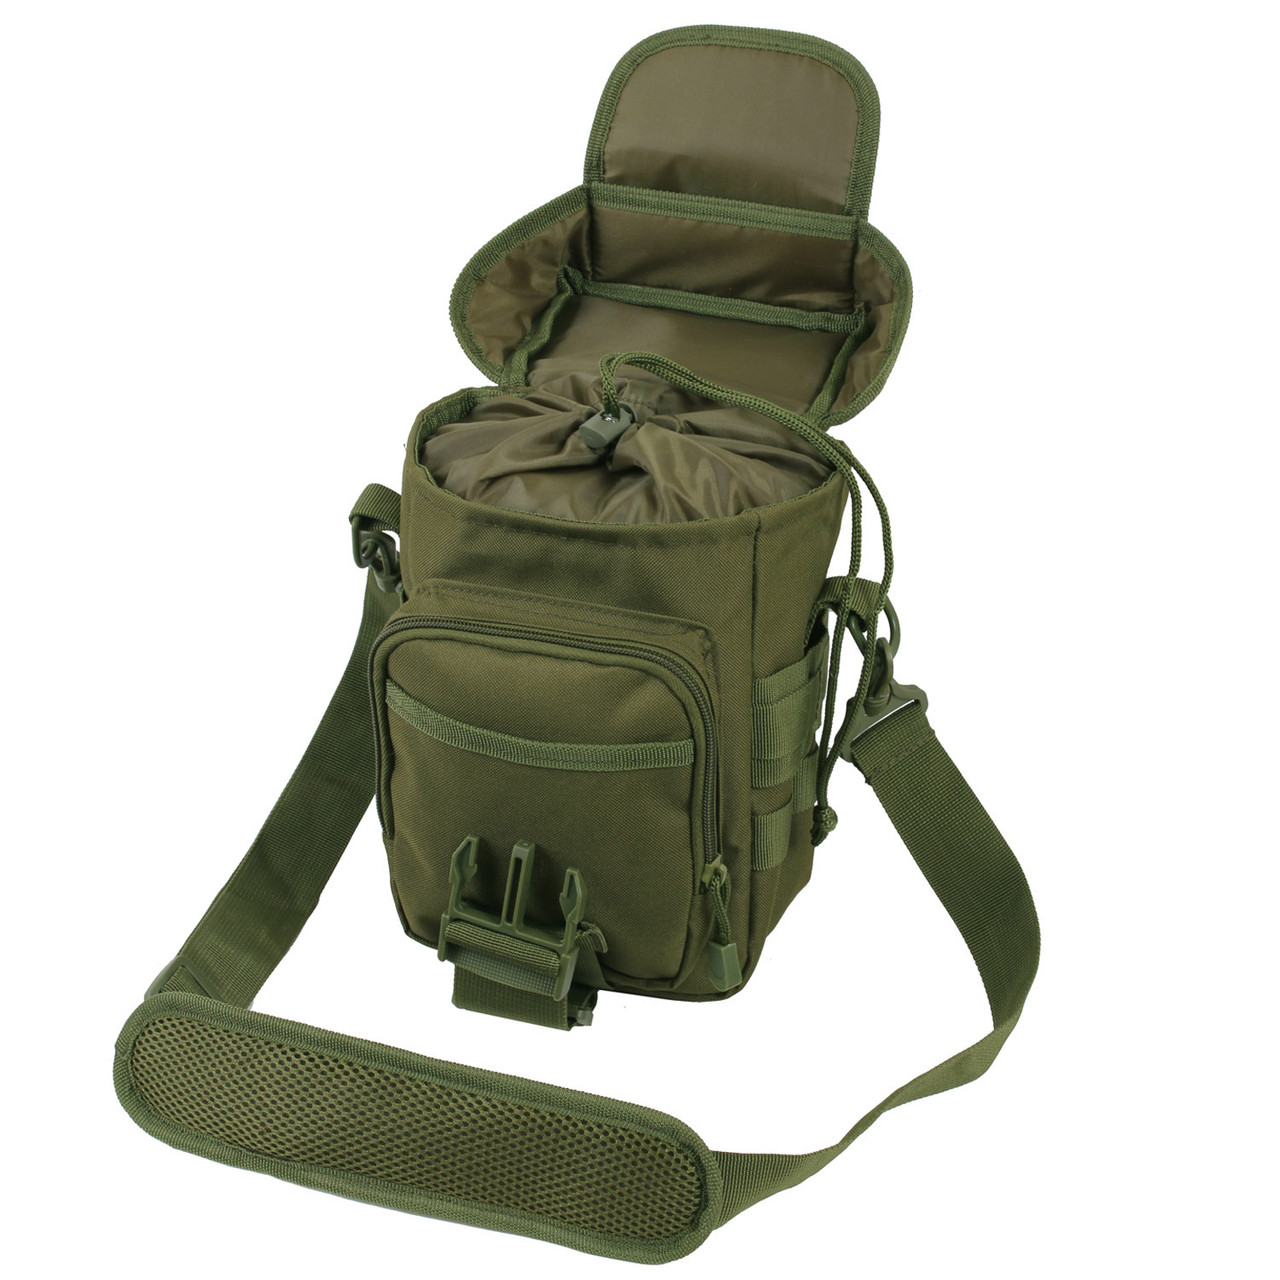 Ammo Utility Shoulder Bag - Fox Outdoor